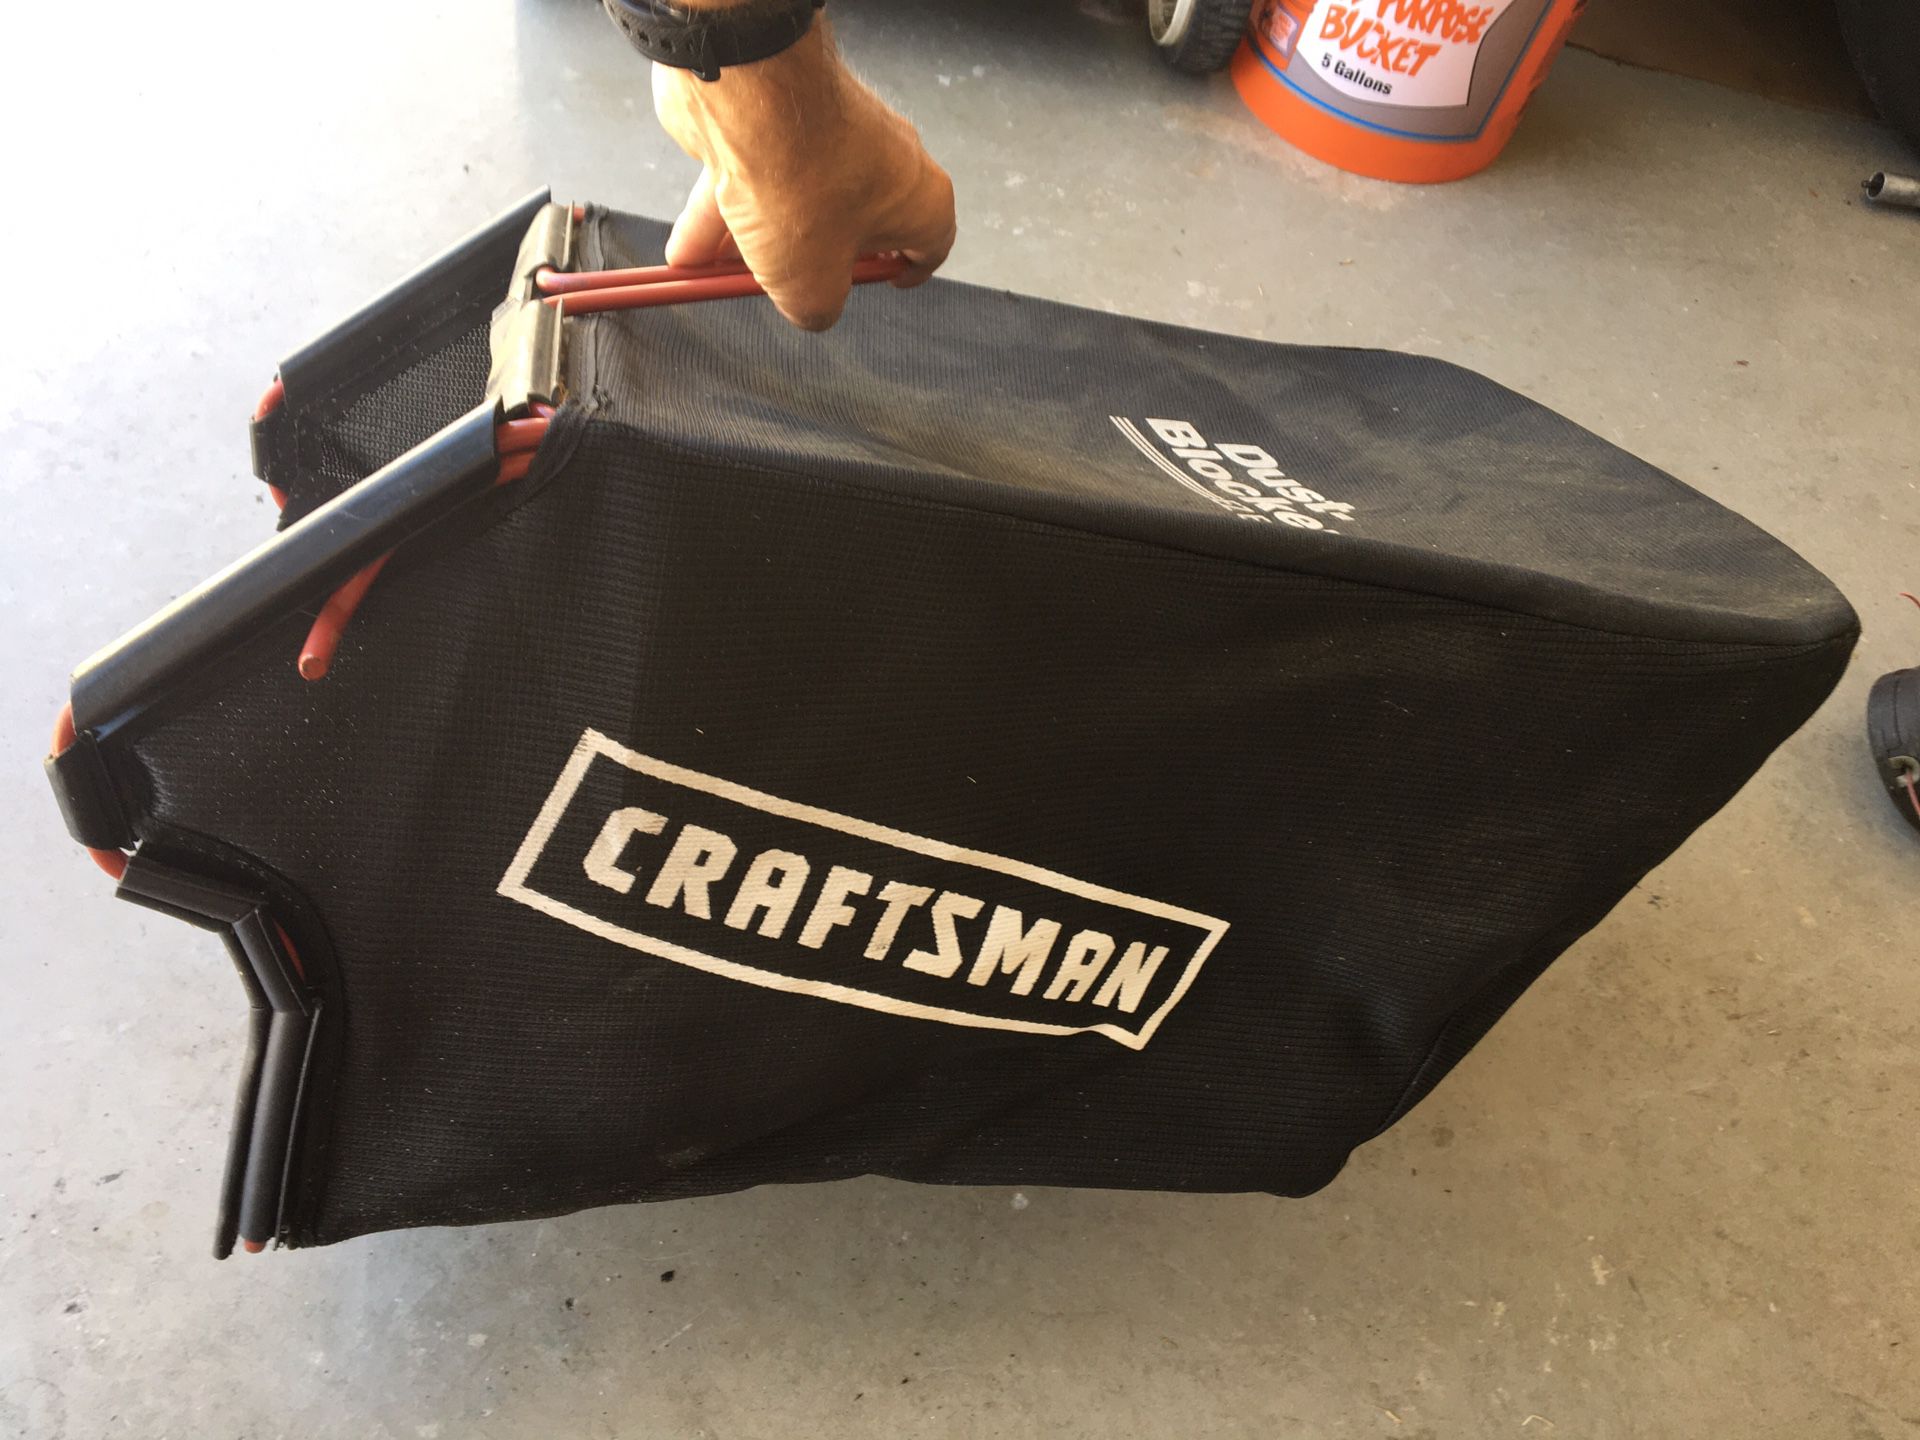 Grass catcher bag for craftsman mower